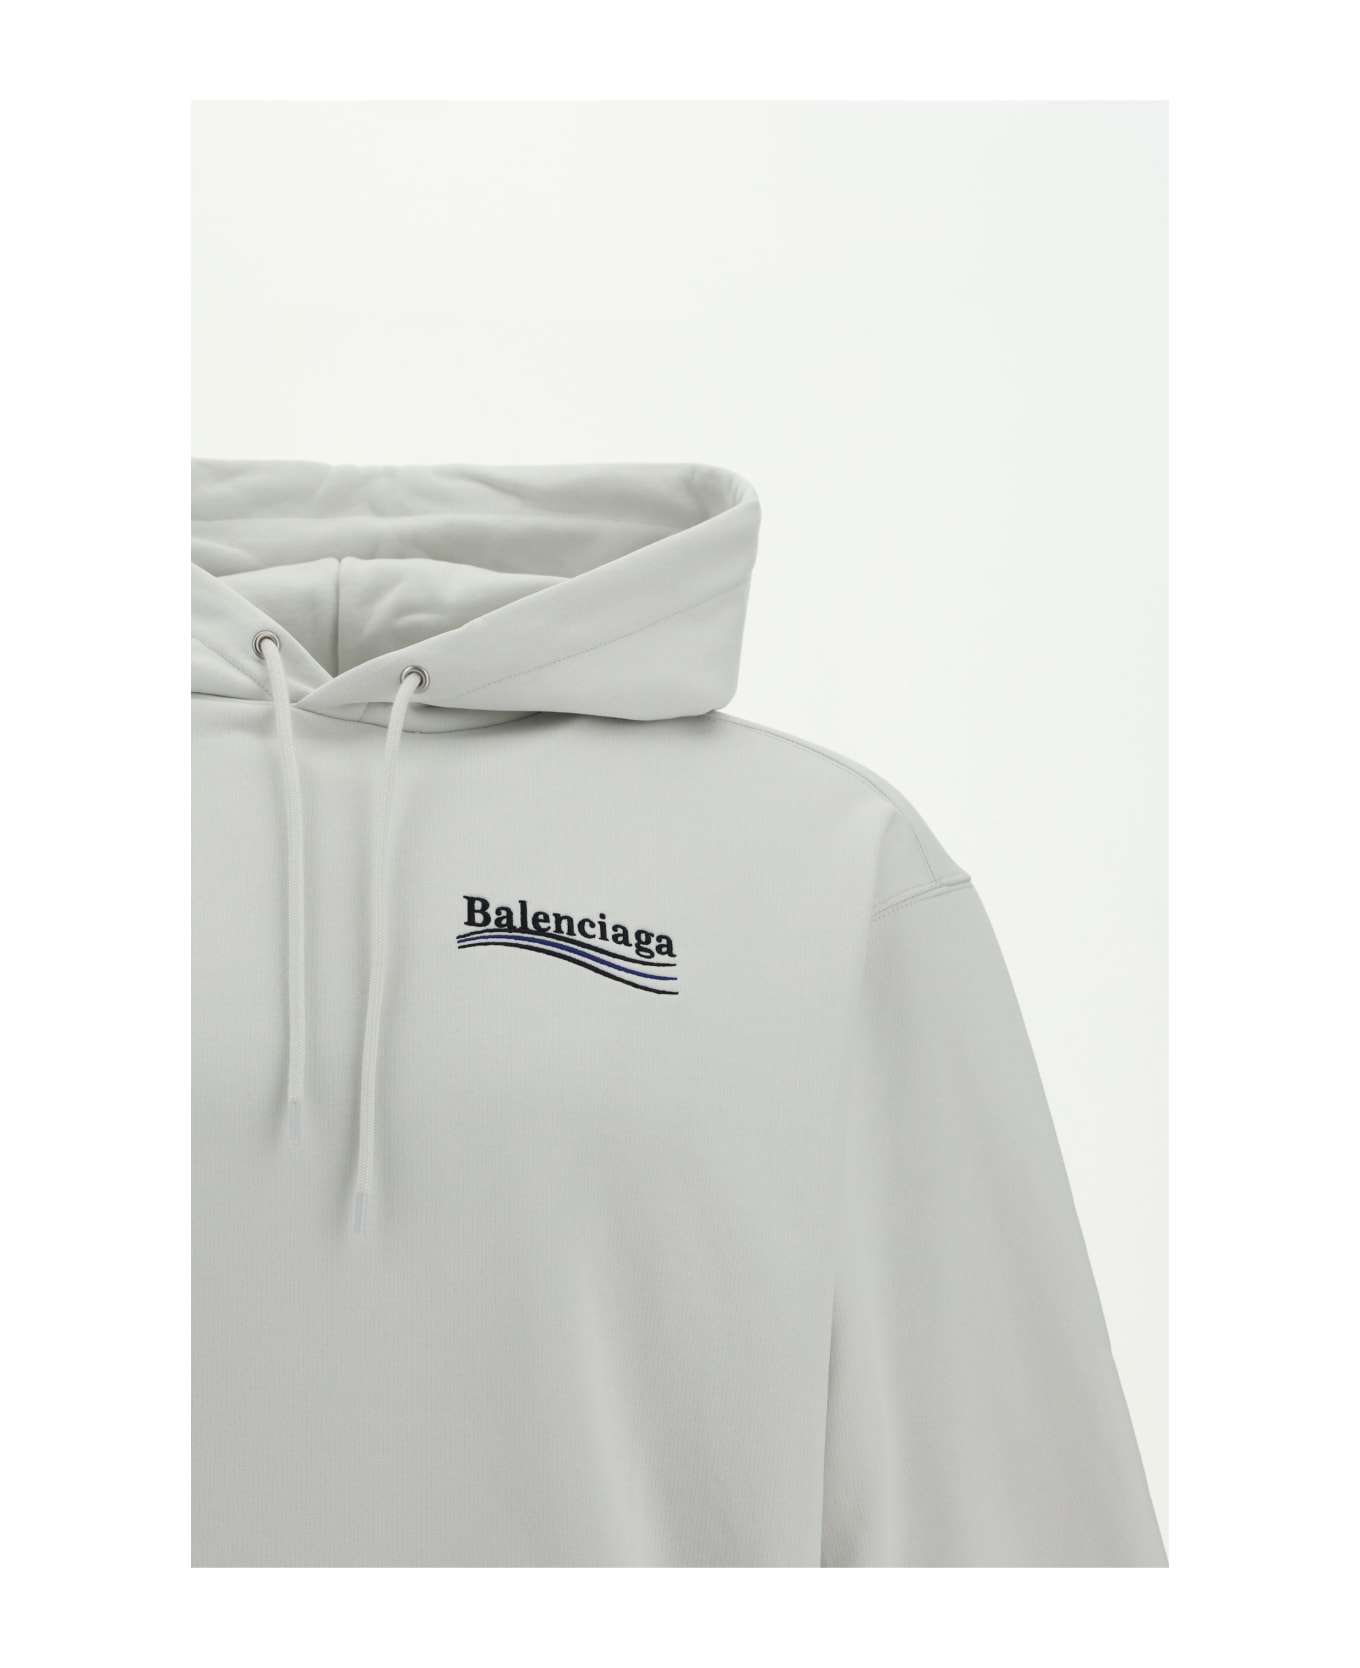 Balenciaga Sweatshirt With Hood And Logo - White フリース